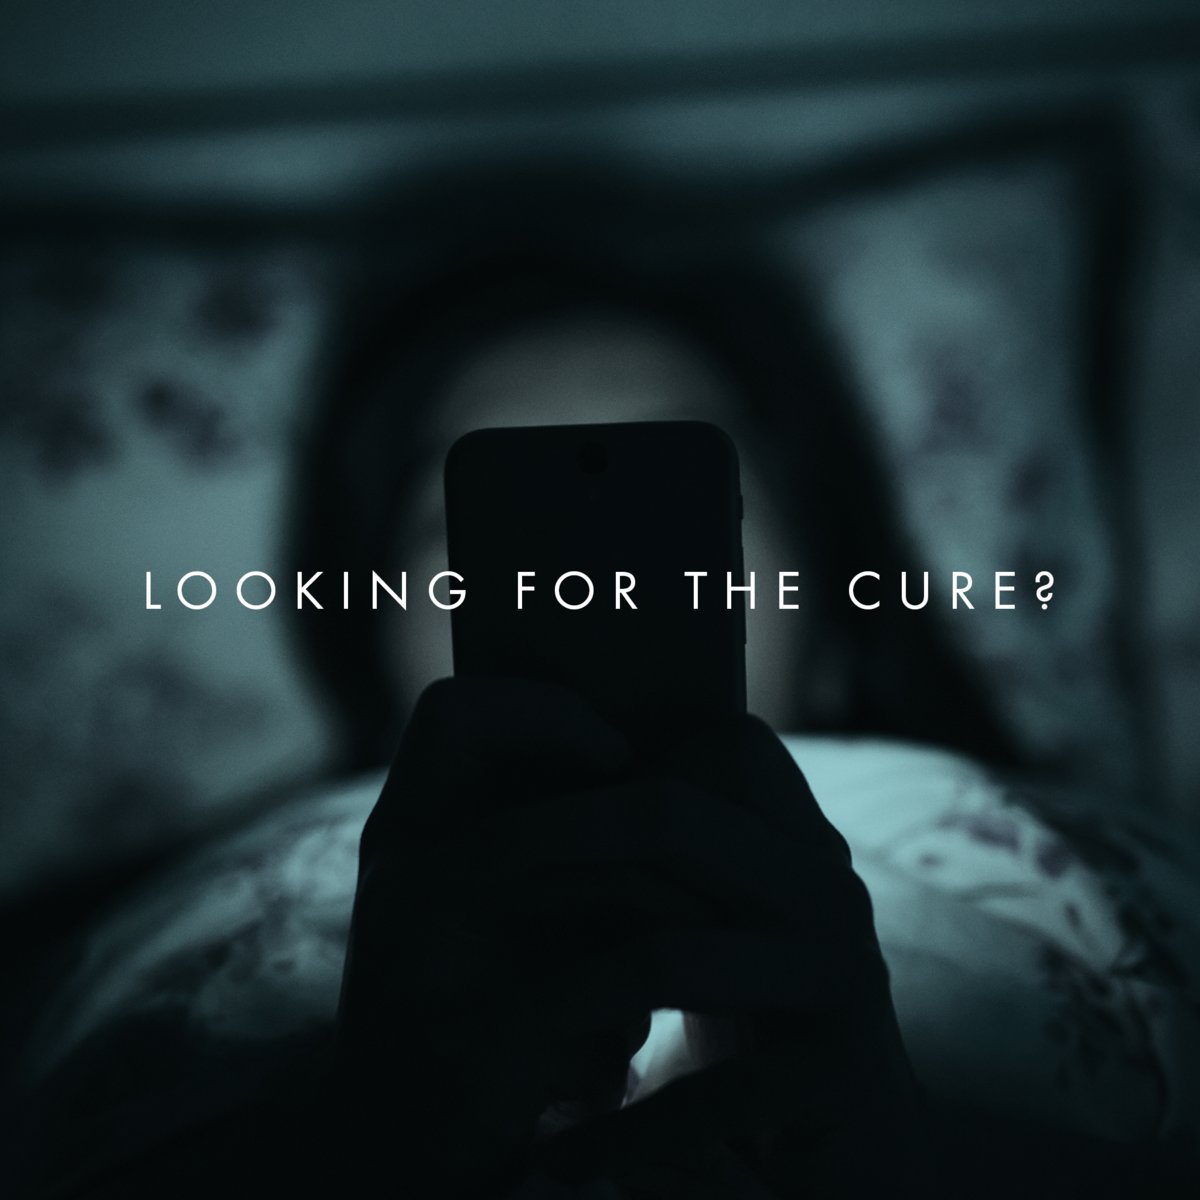 Predstavljamo titlovani trailer za film "A Cure for Wellness"